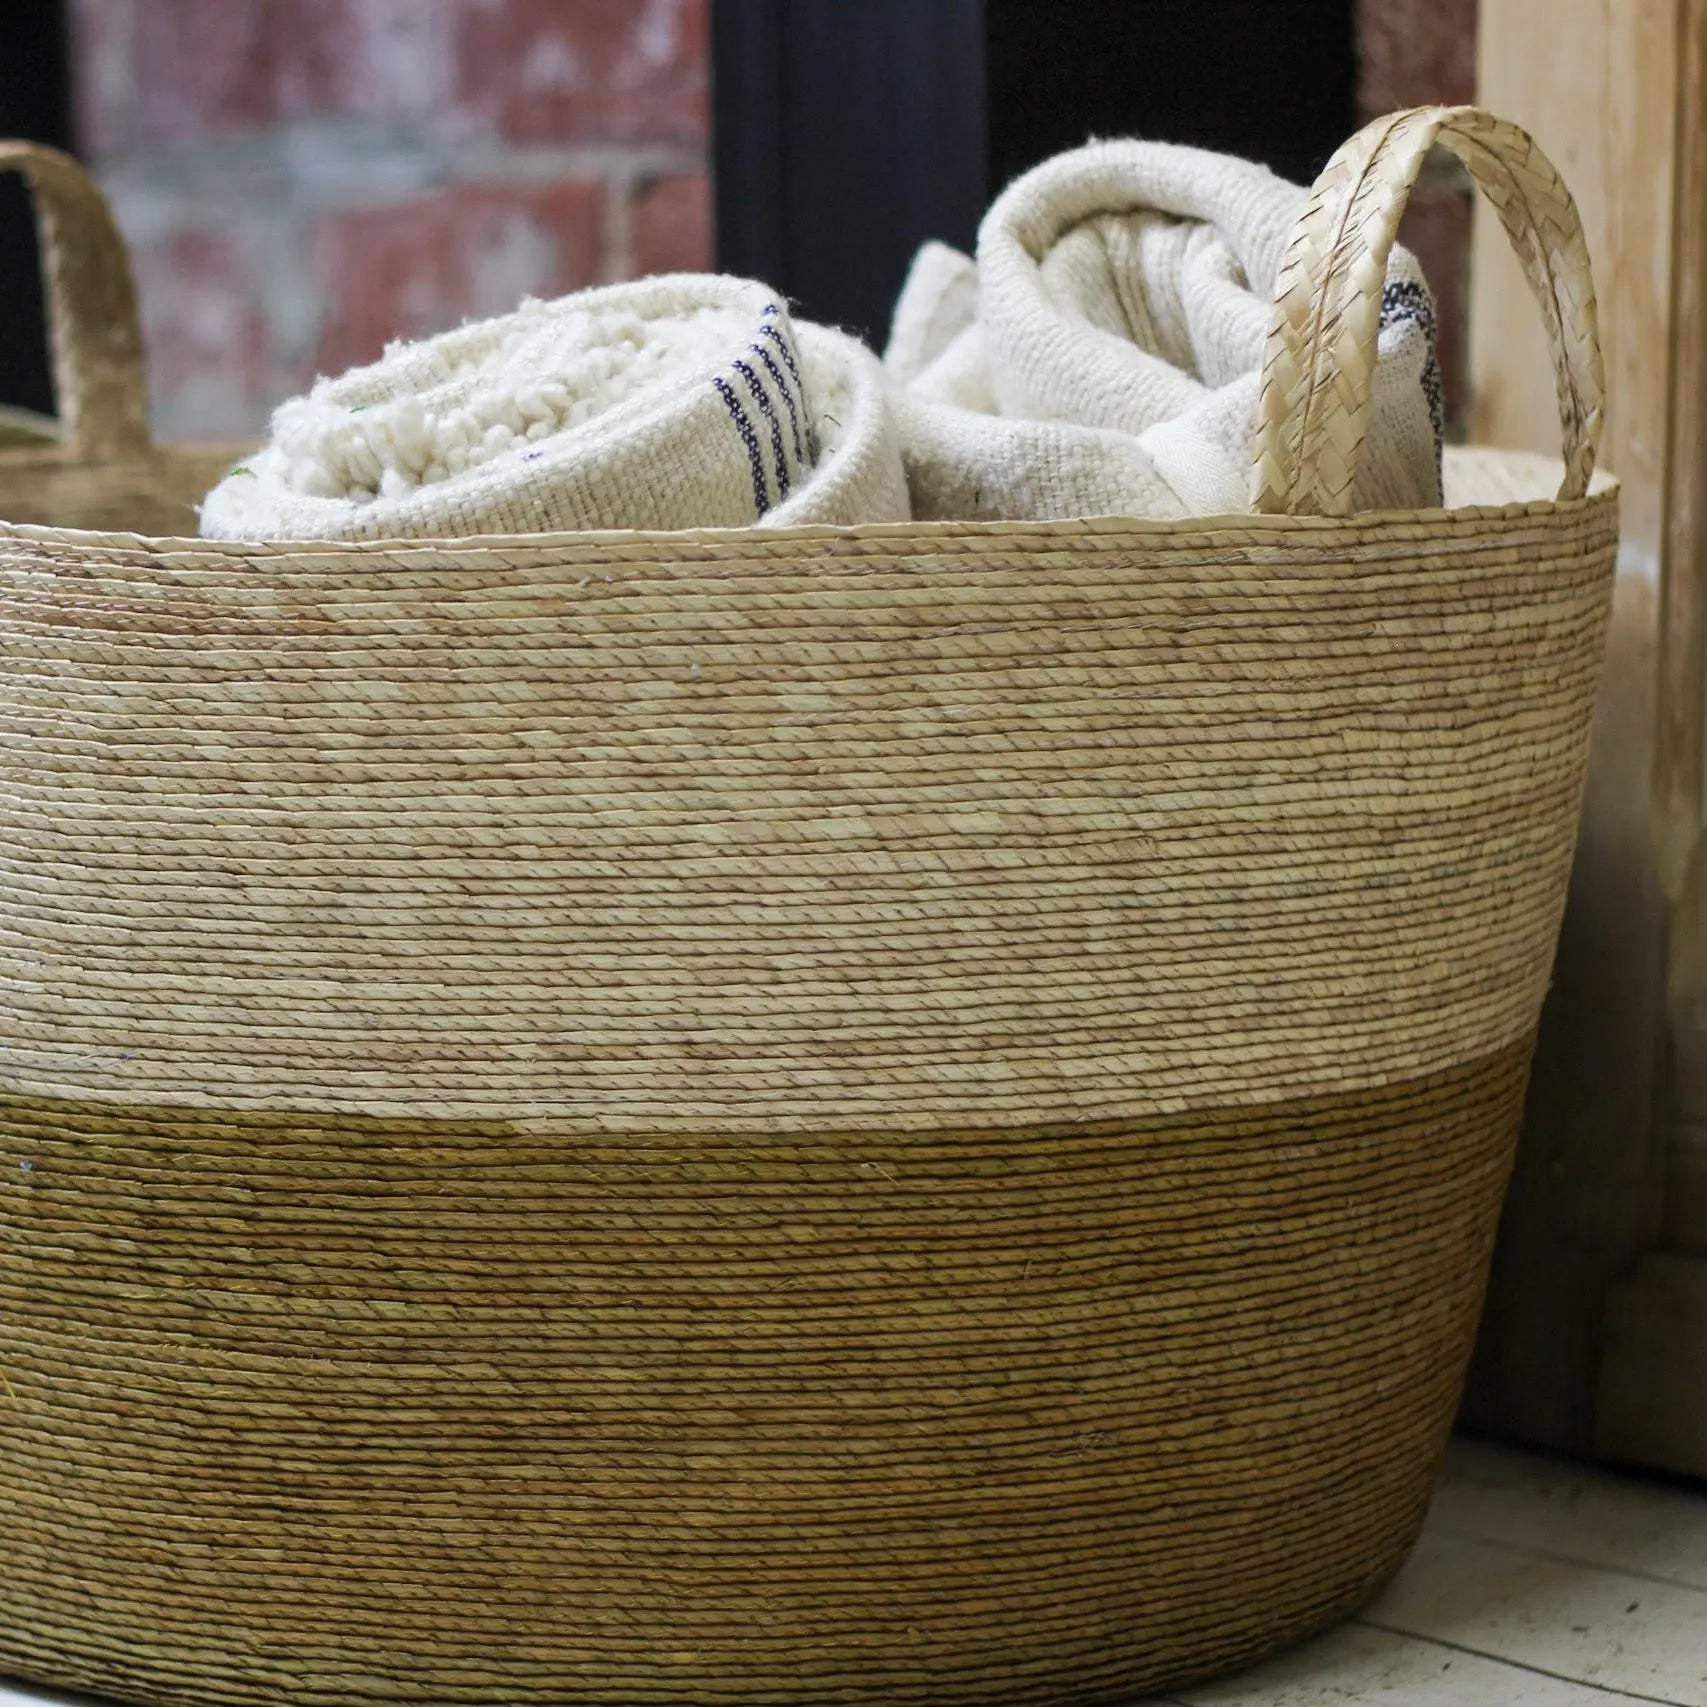 Tambo Basket in Mustard - Home Smith